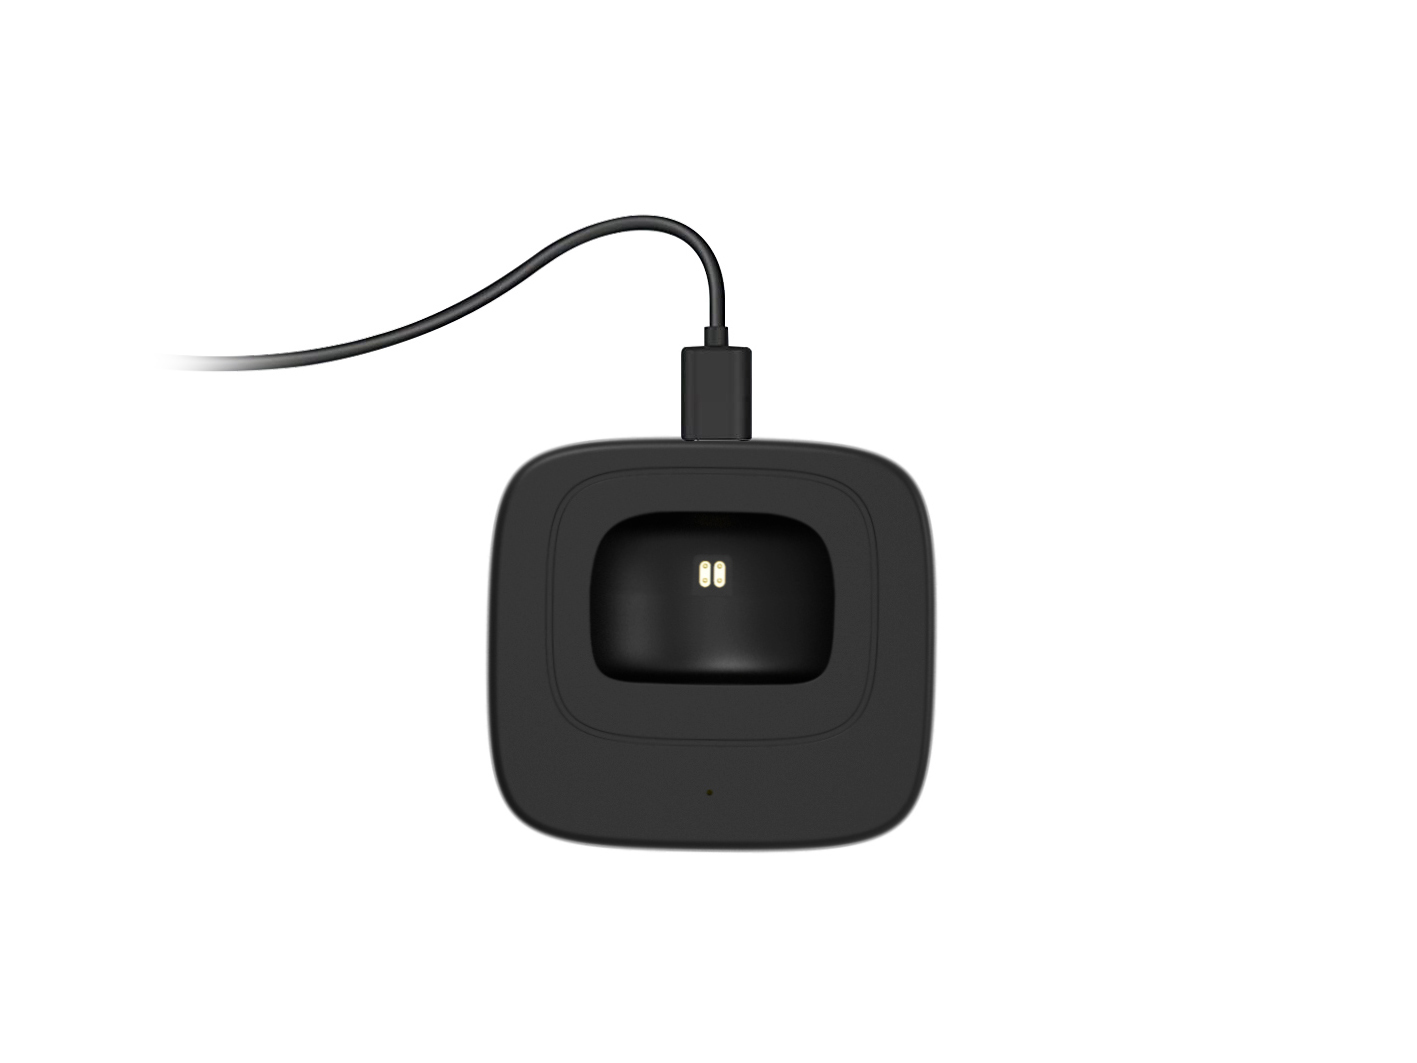 Conceptronic - Headset Conceptronic Polona 03BDA Mono-Headset c/Charging Dock e Bluetooth Audio Adapter + Dongle